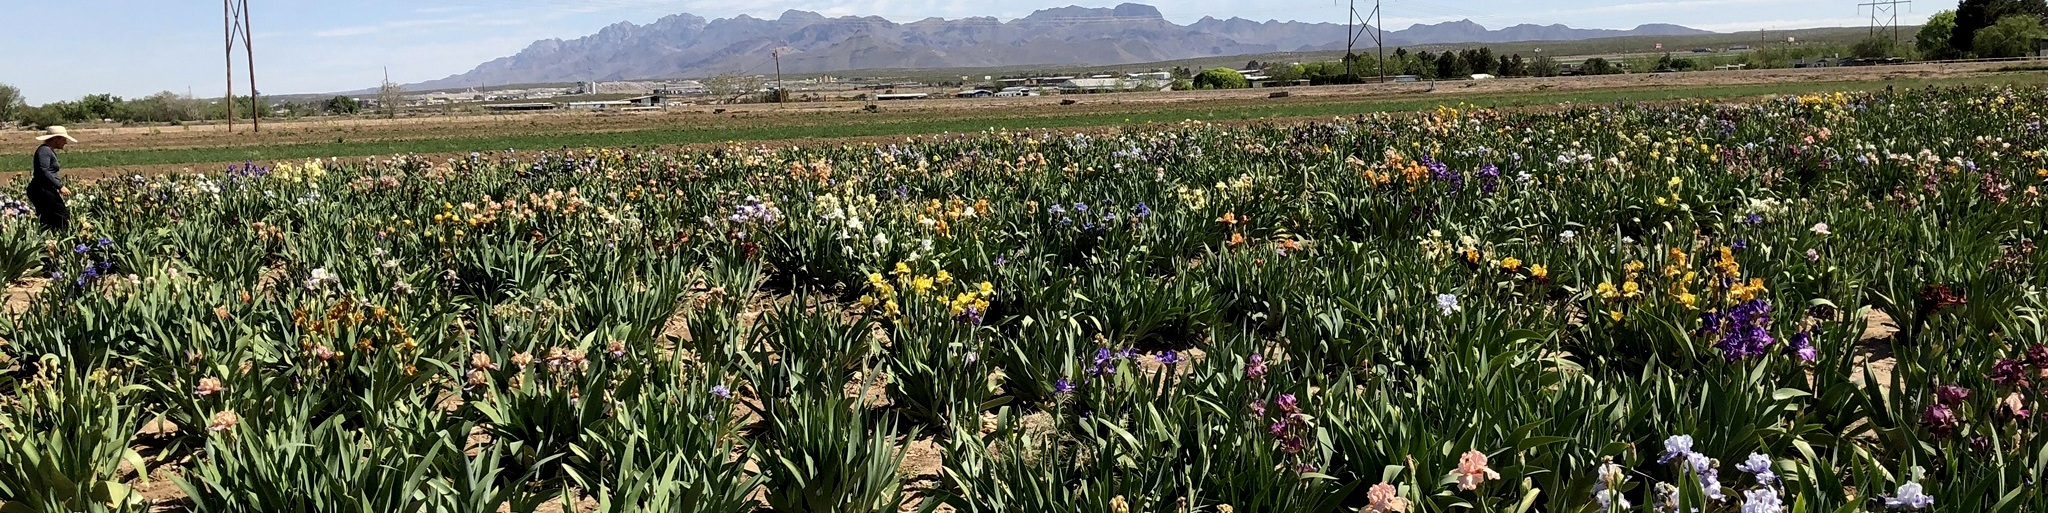 Blue J Iris Garden has over 4000 irises and covers acres